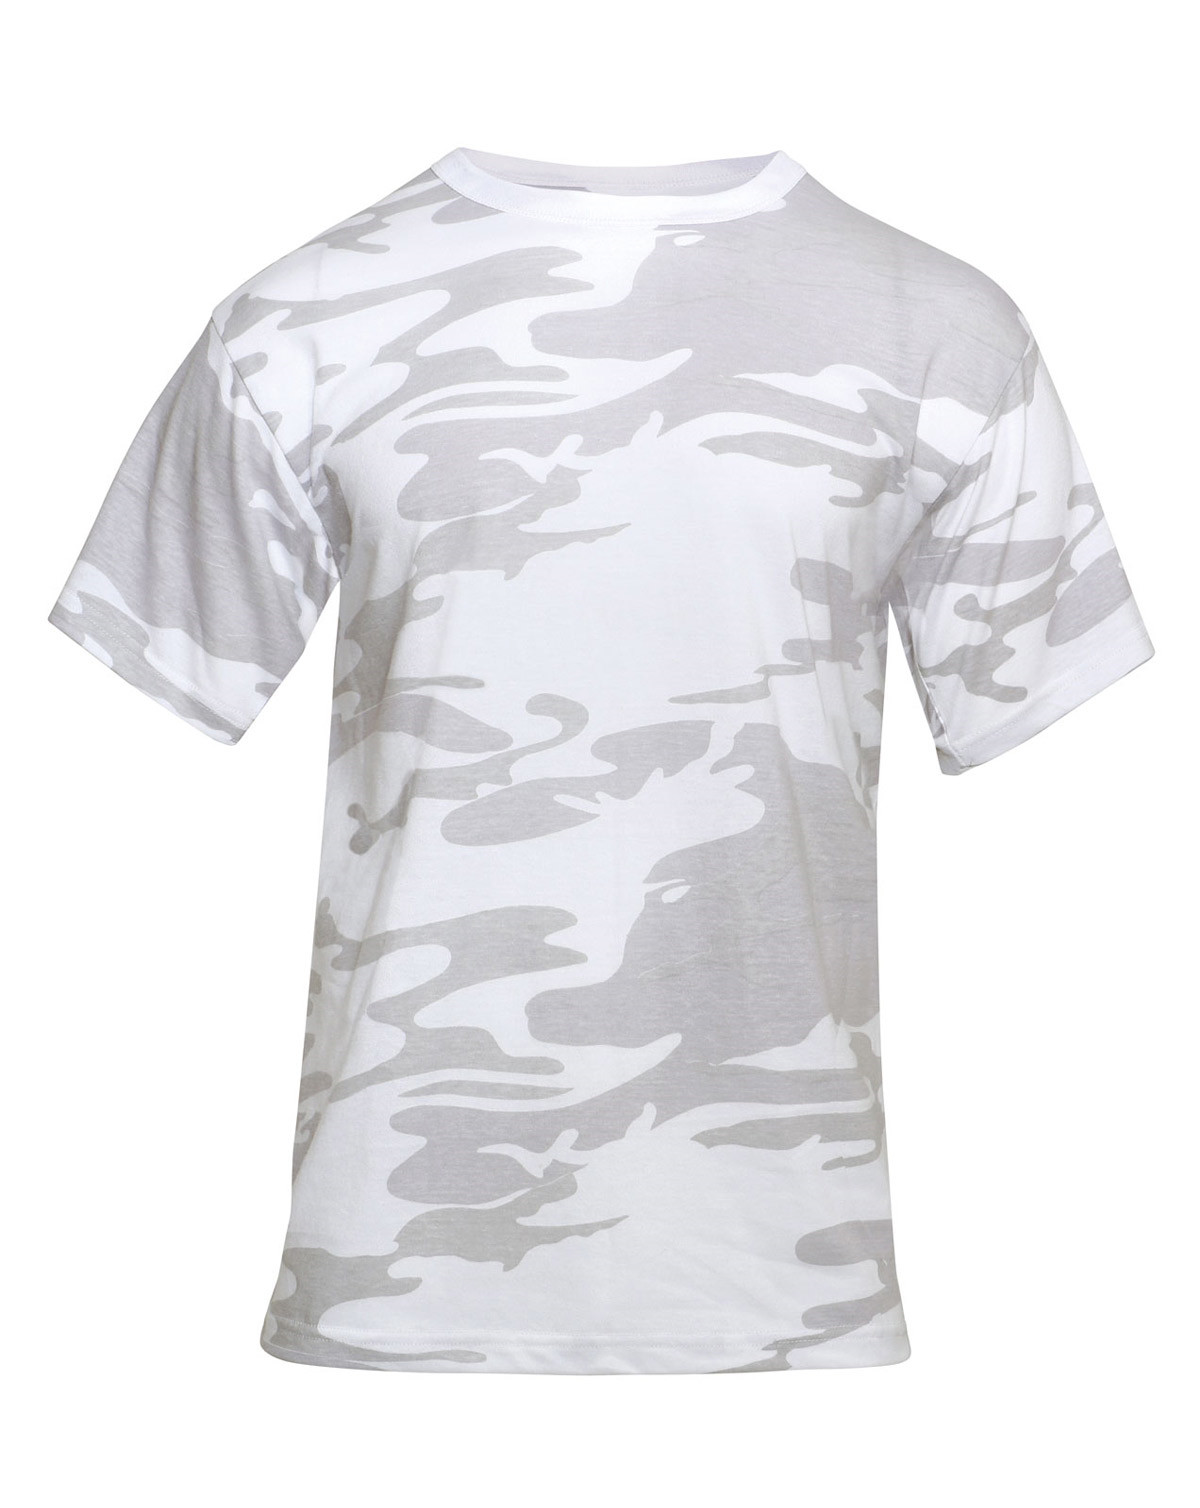 Rothco T-shirt - Mange Camouflager (Grå / Hvid, 3XL)